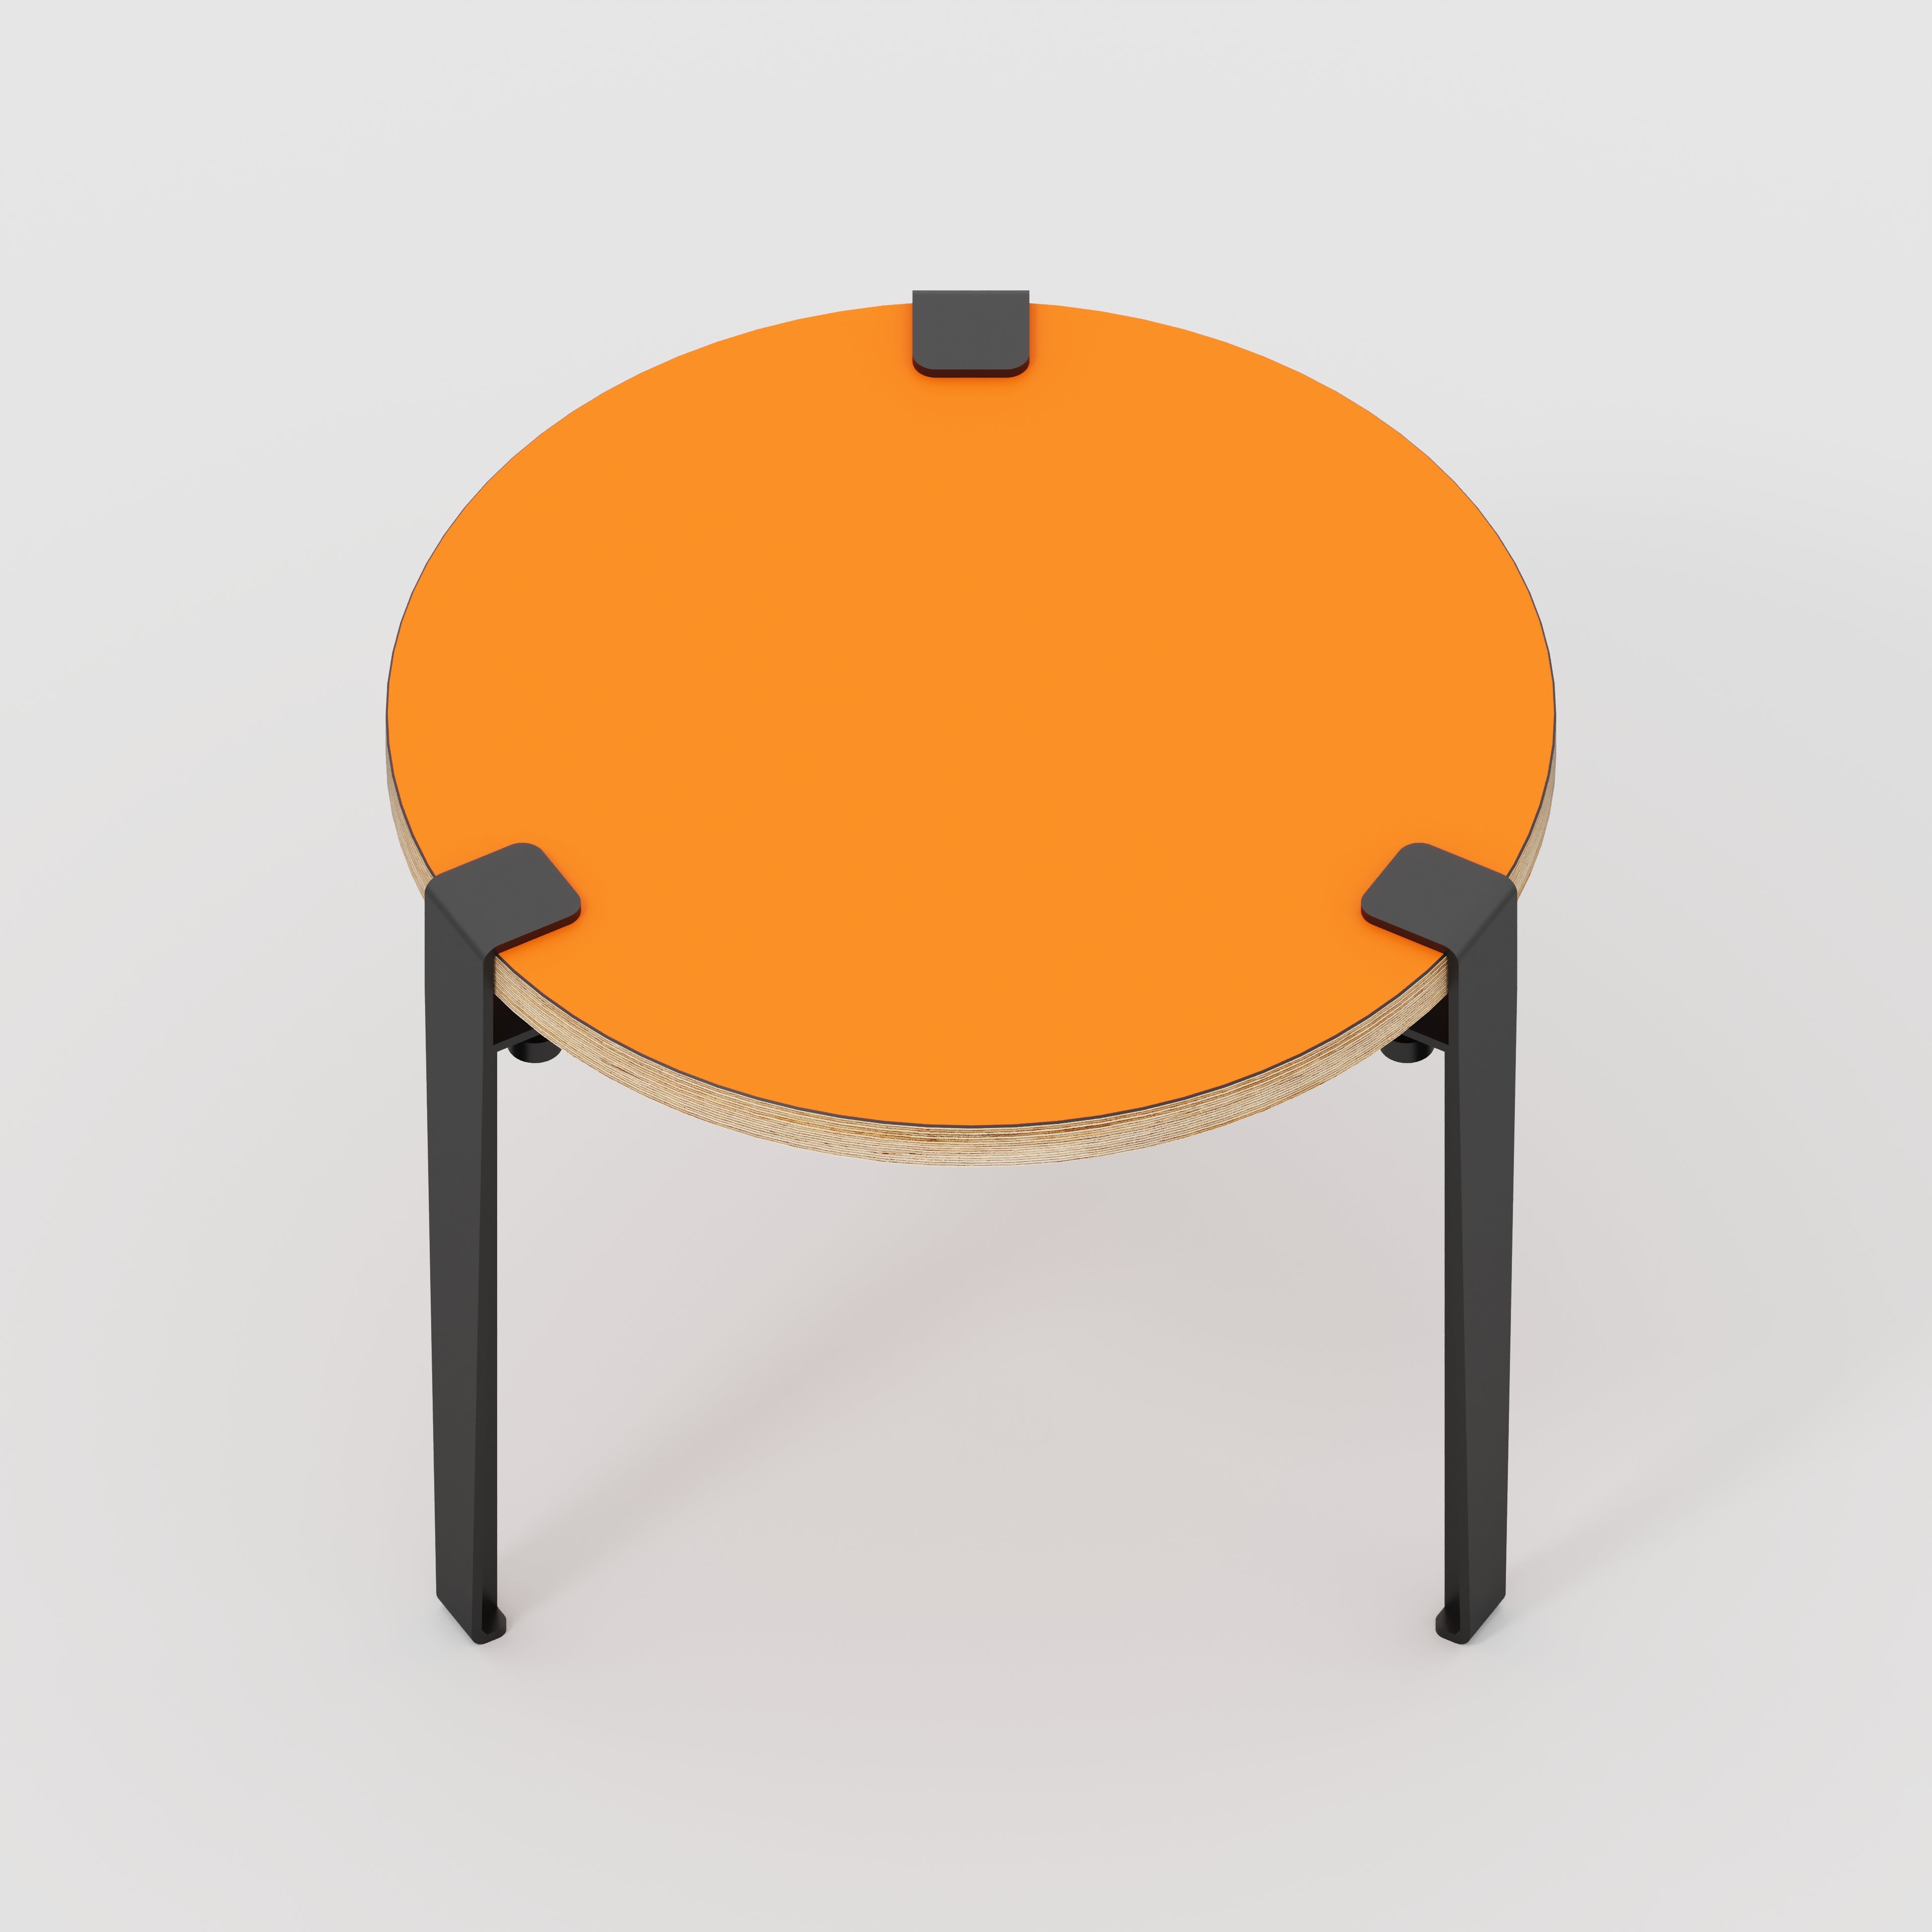 Round Side Table with Black Tiptoe Legs - Formica Levante Orange - 500(dia) x 430(h)